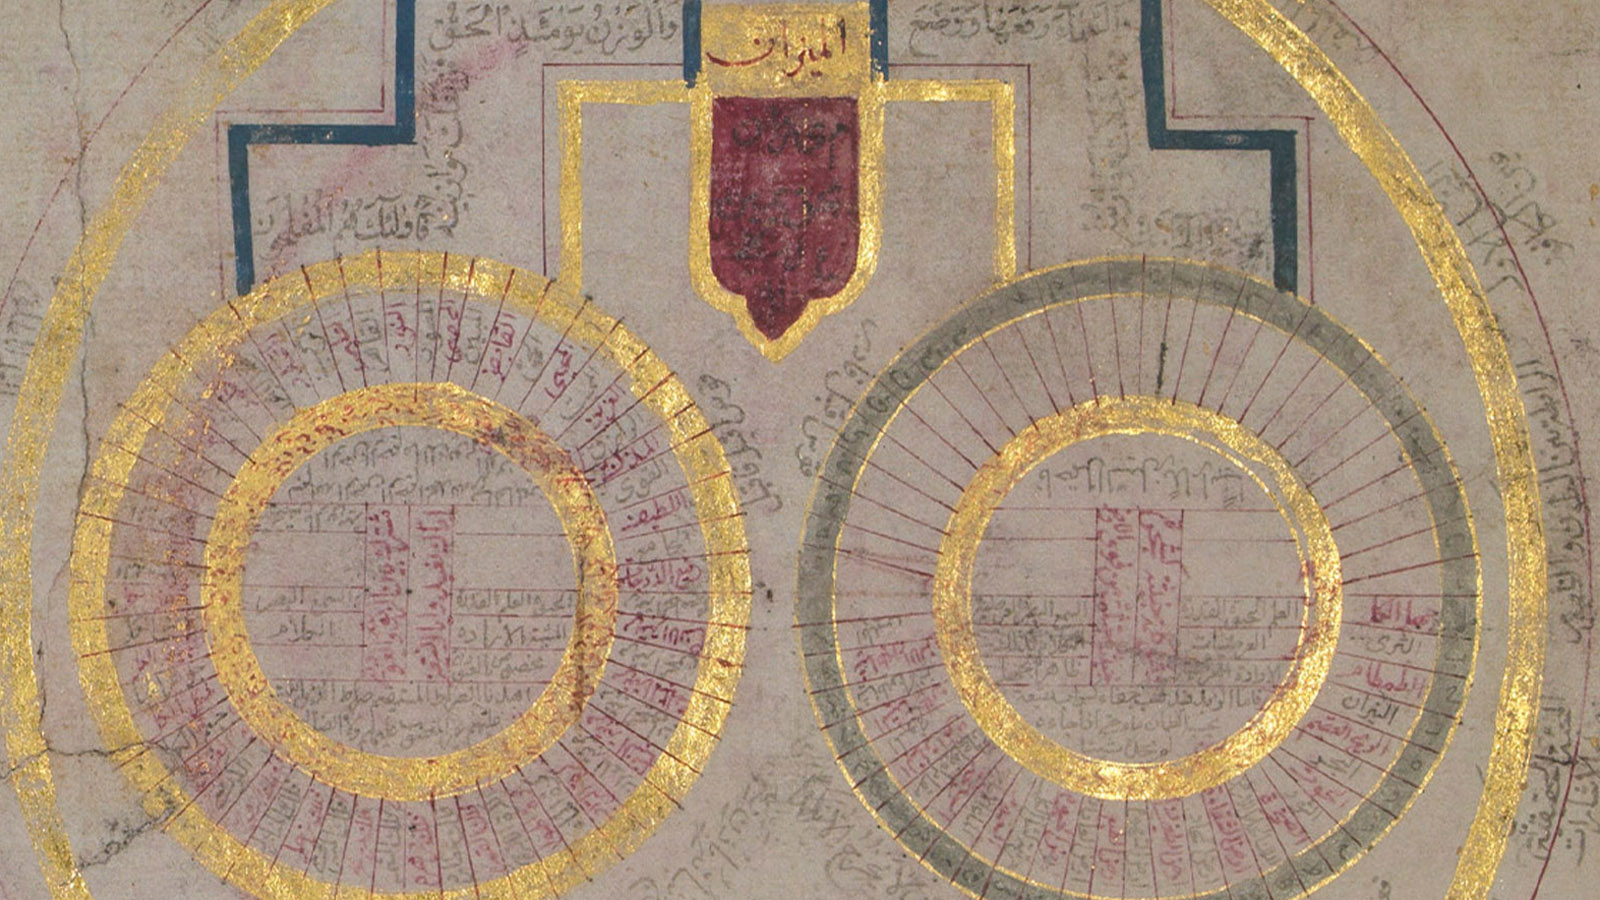 ‘The Emperor’s Gift: Circles of the Sciences and Tables of the Figures’. (Tuḥfat al-Khāqān:Dawāʾir al-ʿulūm wa-jadāwil al-ruqūm), fol. 6v (detail). Calouste Gulbenkian Museum